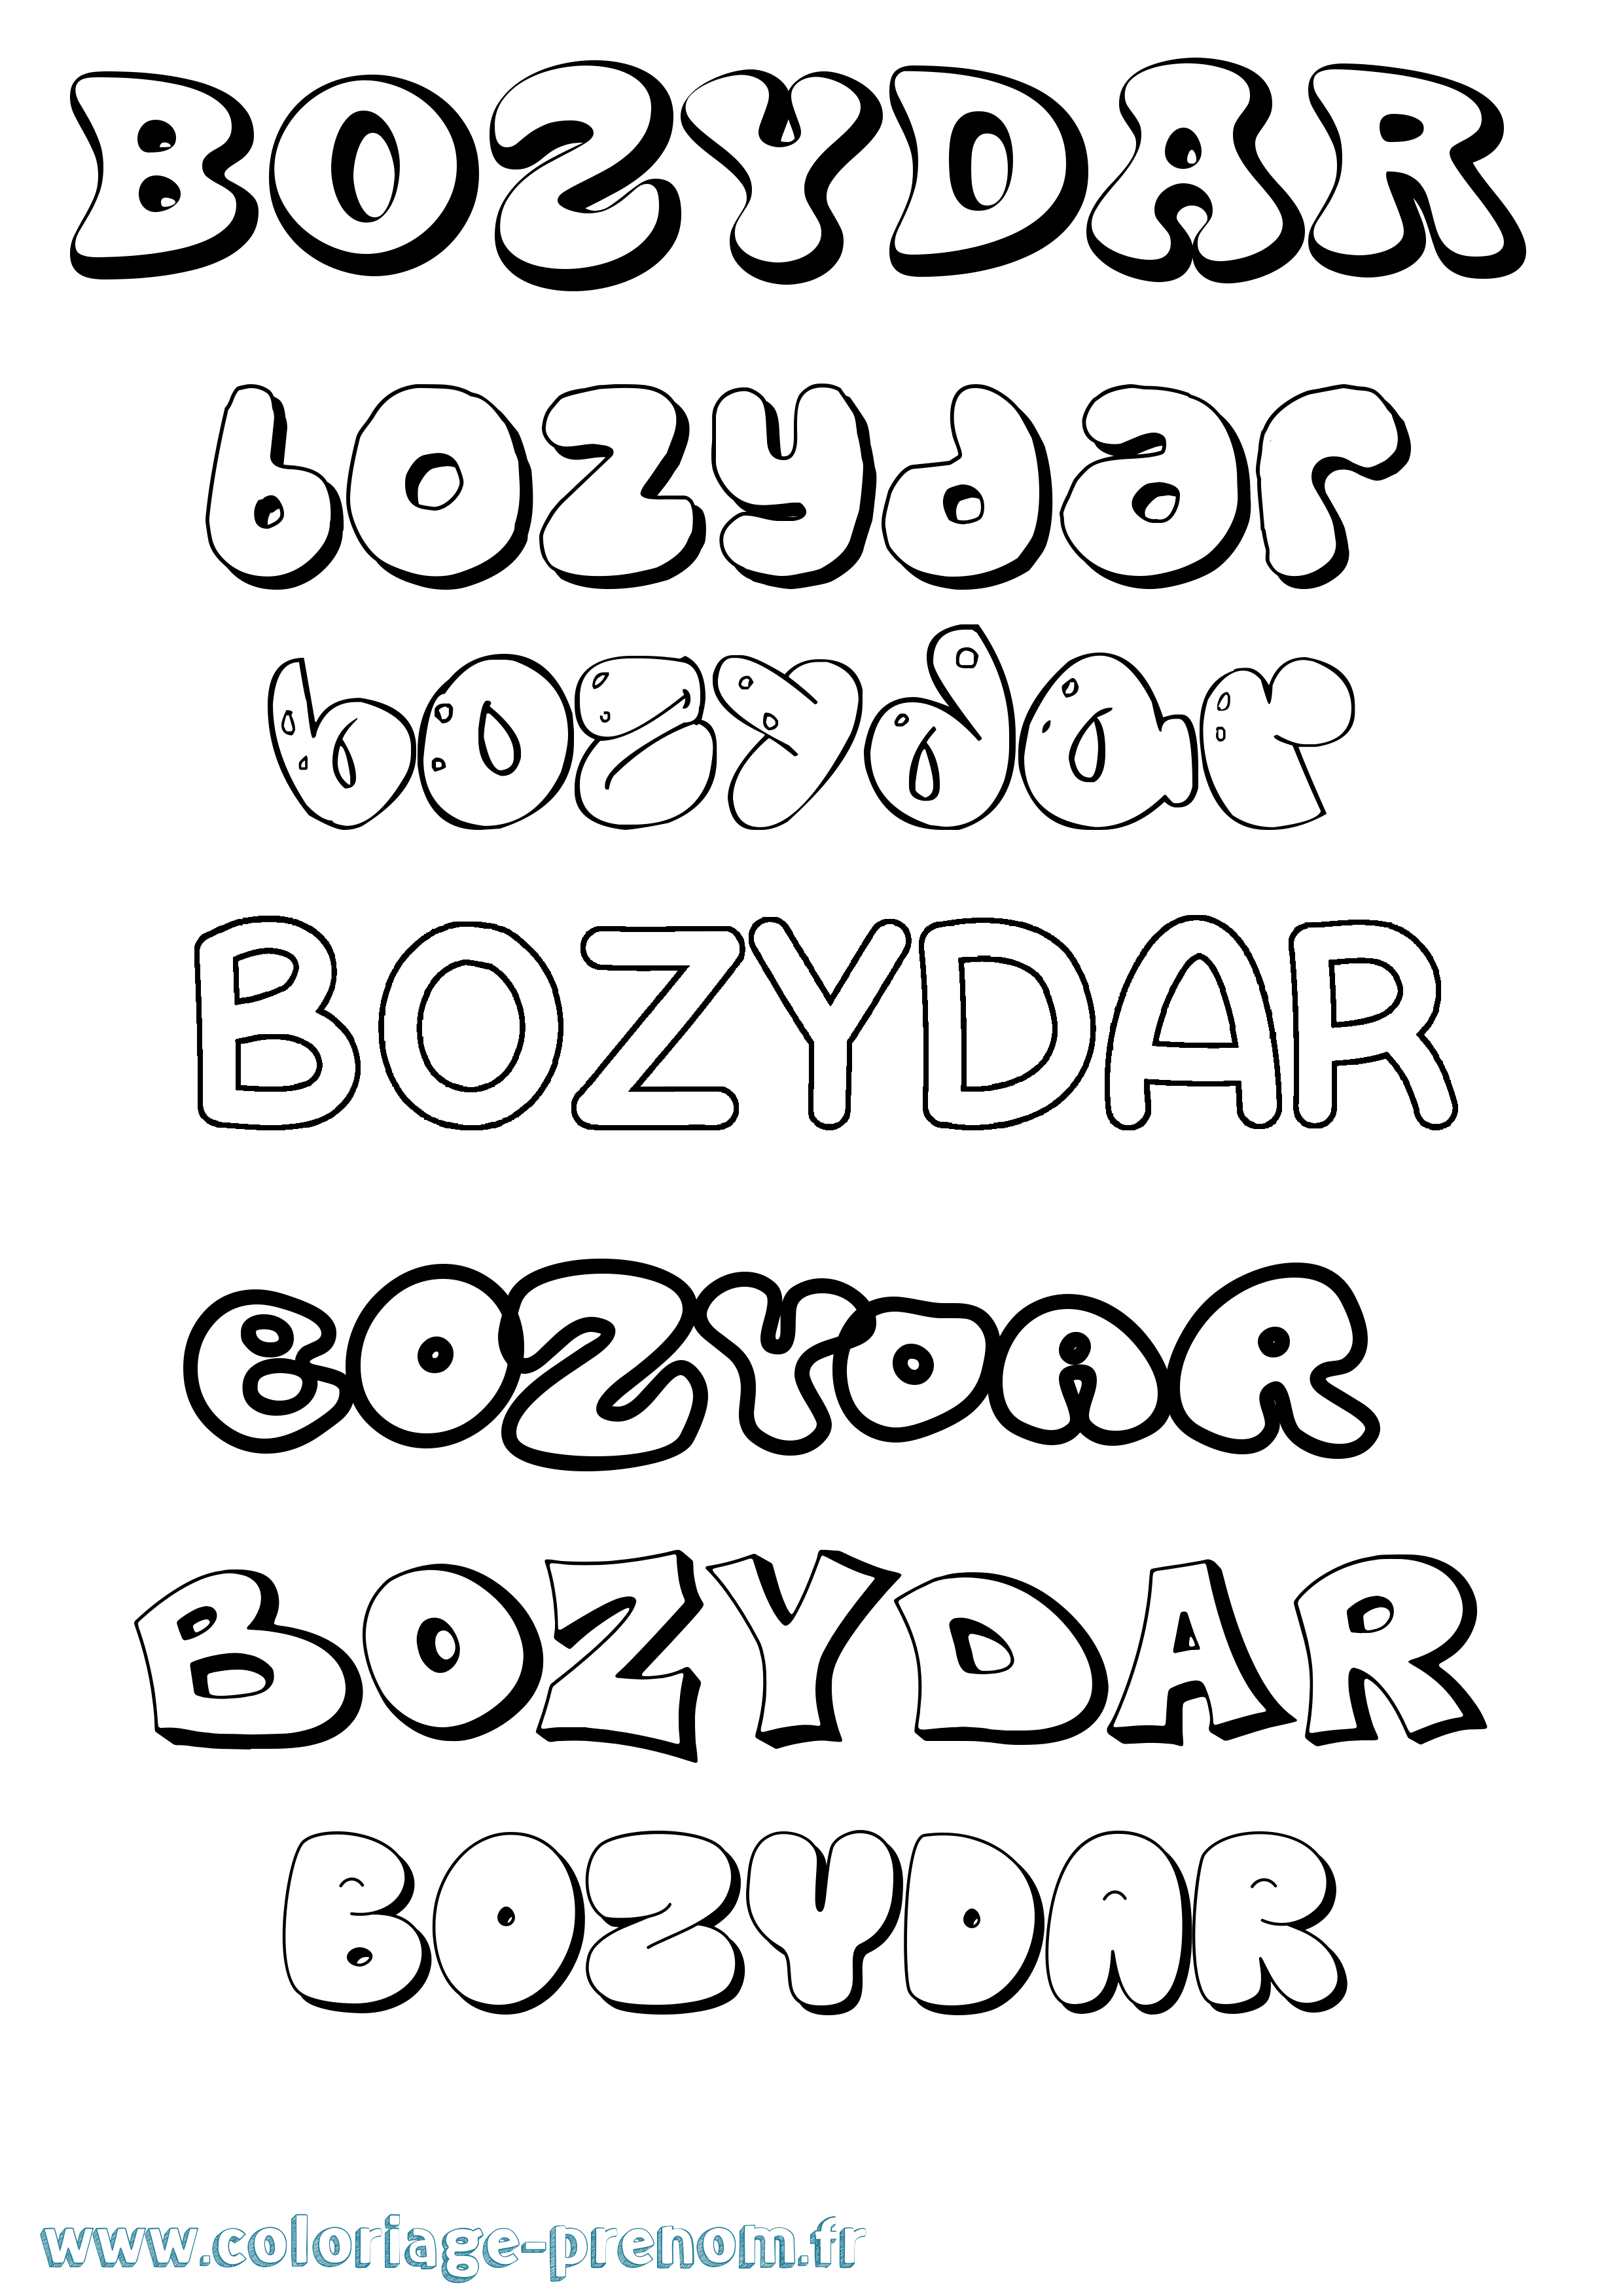 Coloriage prénom Bozydar Bubble